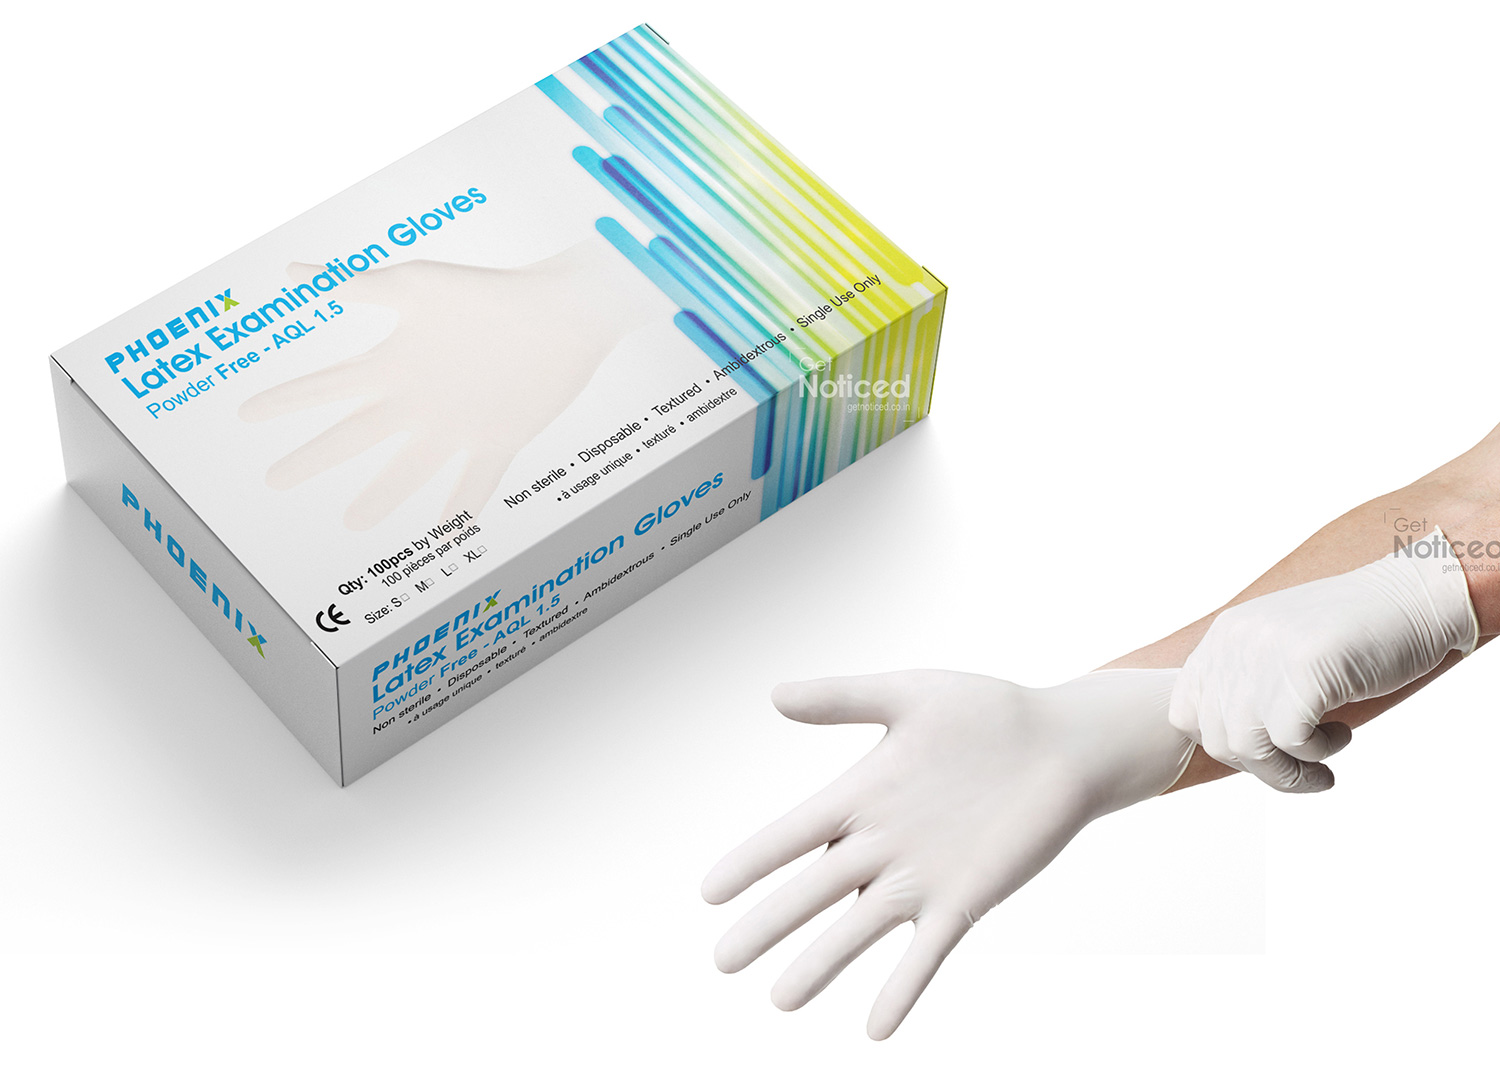 phoenixd latex examination gloves packaging design